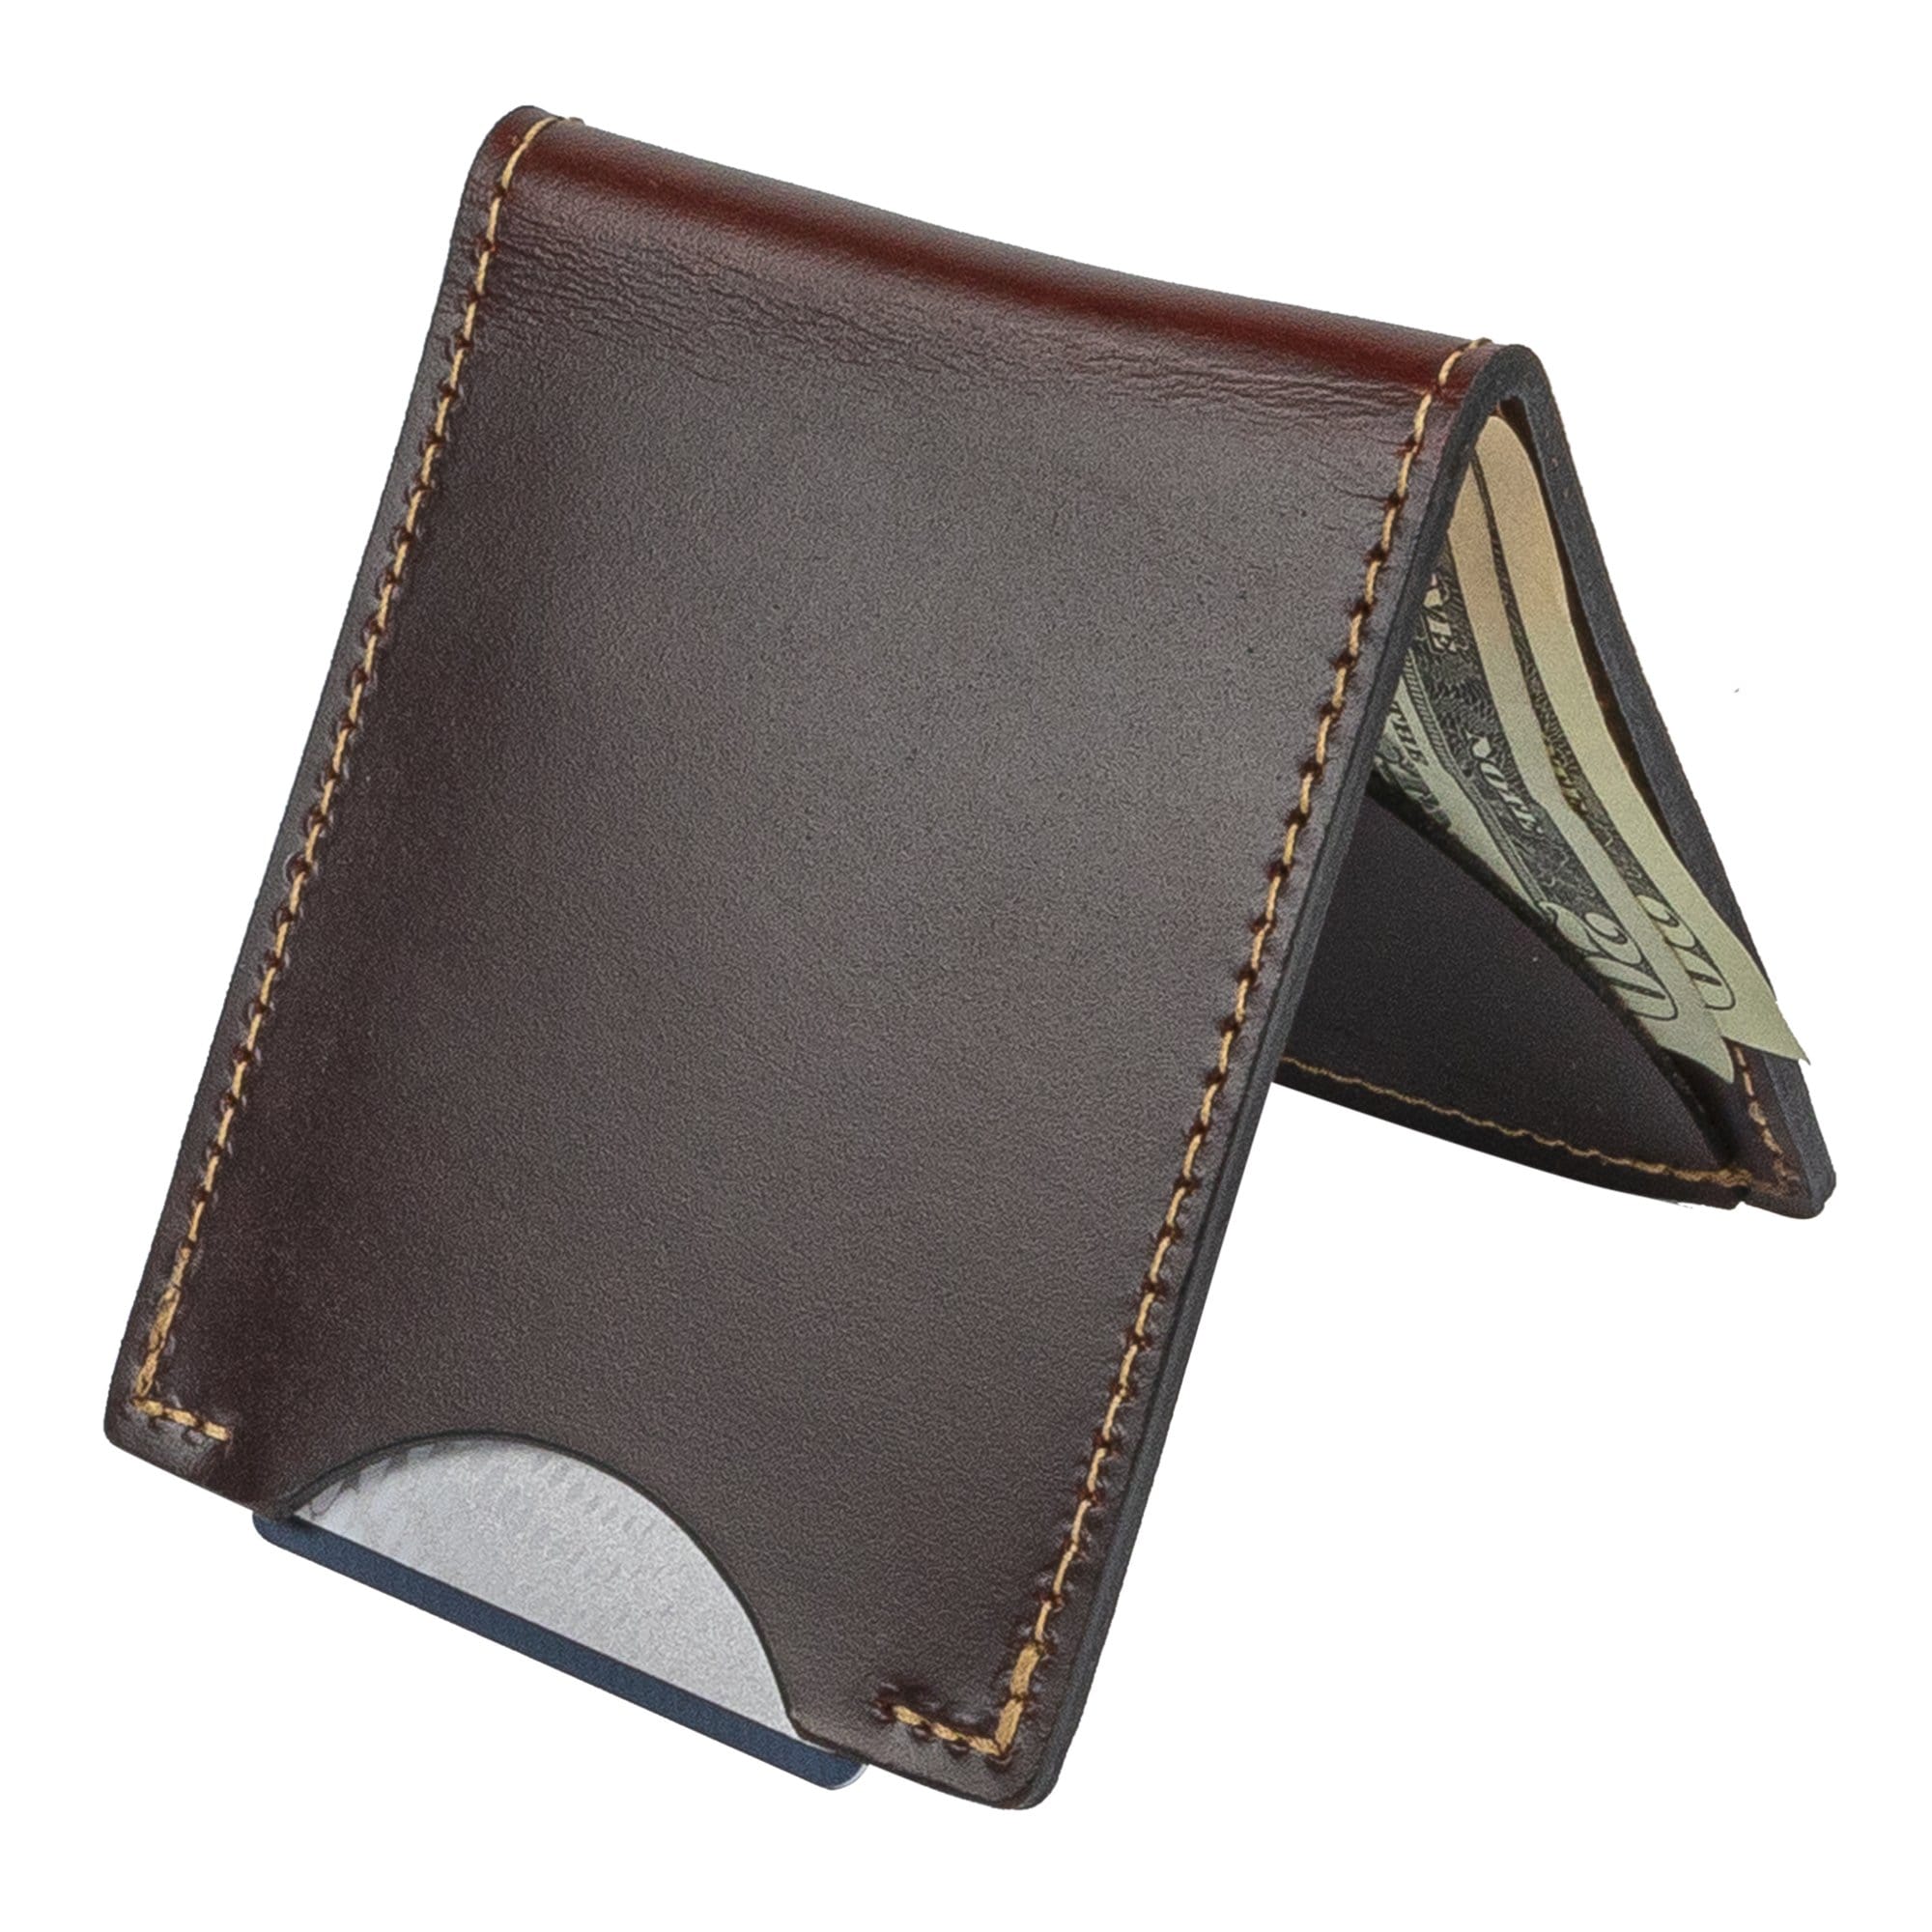 Main Street Forge Wallet Whiskey Barrel Brown Front Pocket Slim Bifold Wallet for Men | Made in USA 816895024980